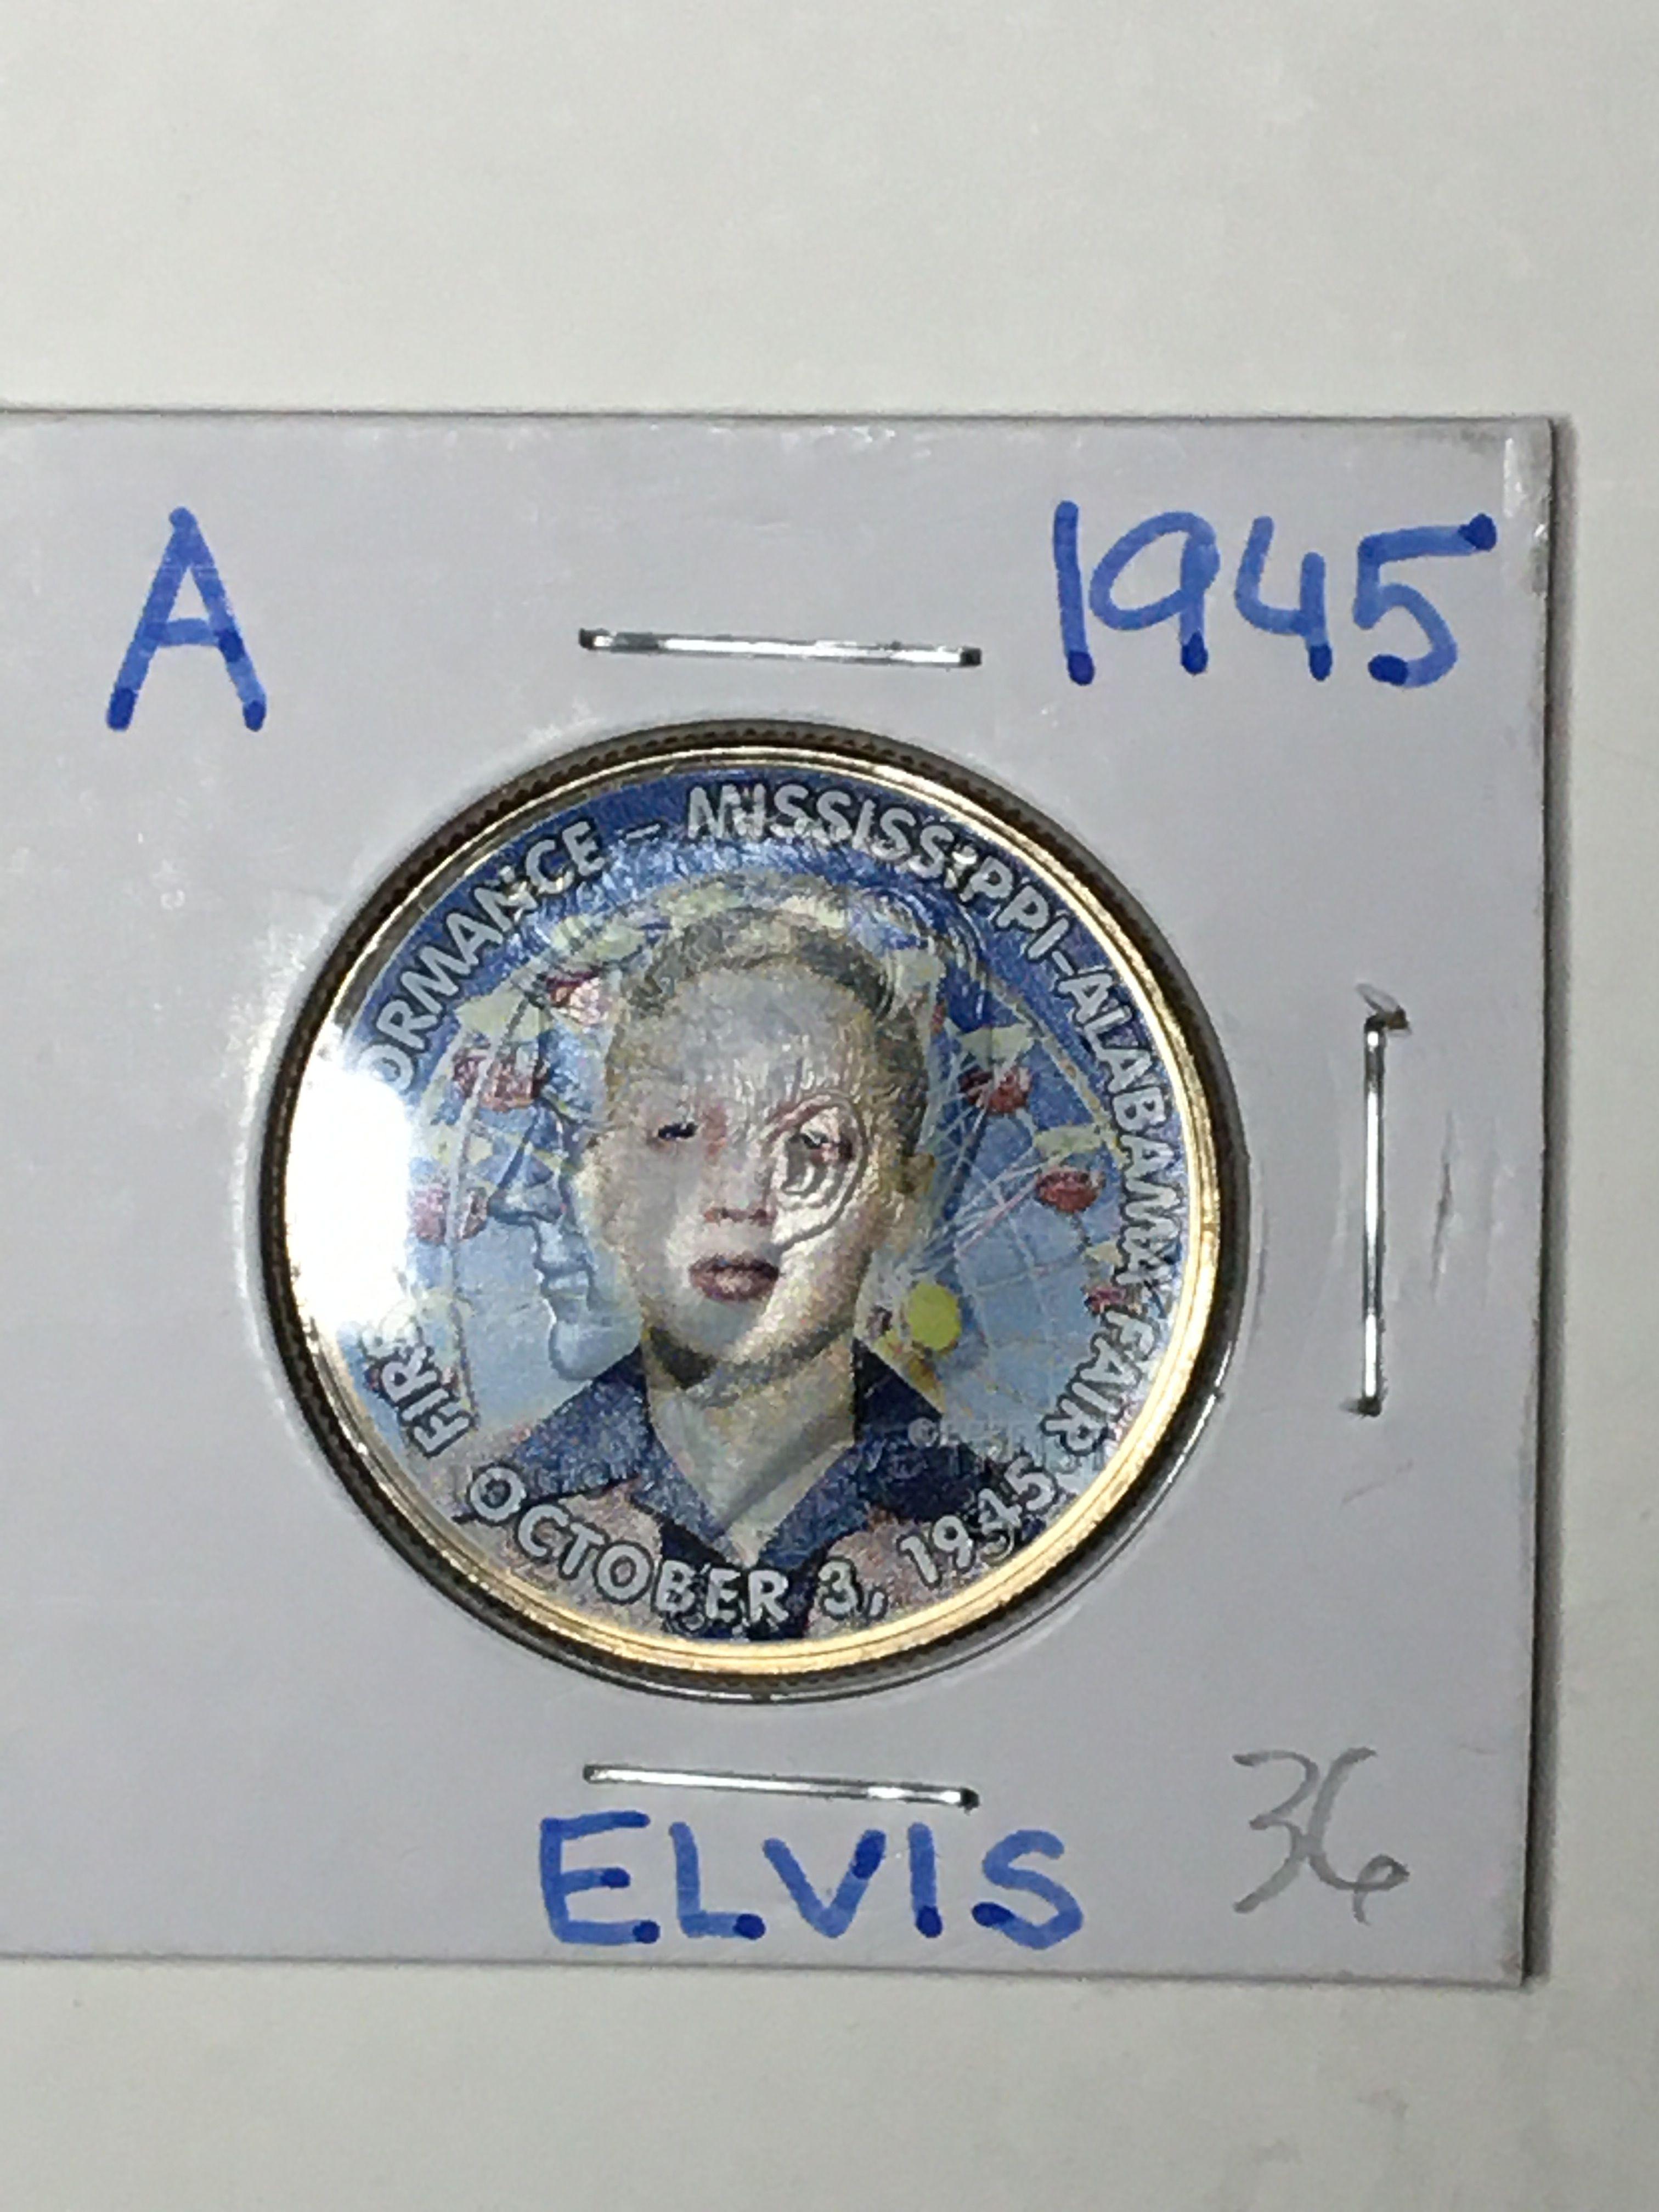 Colorized Kennedy Half Dollar Highlighten "Elvis Presleys" Life